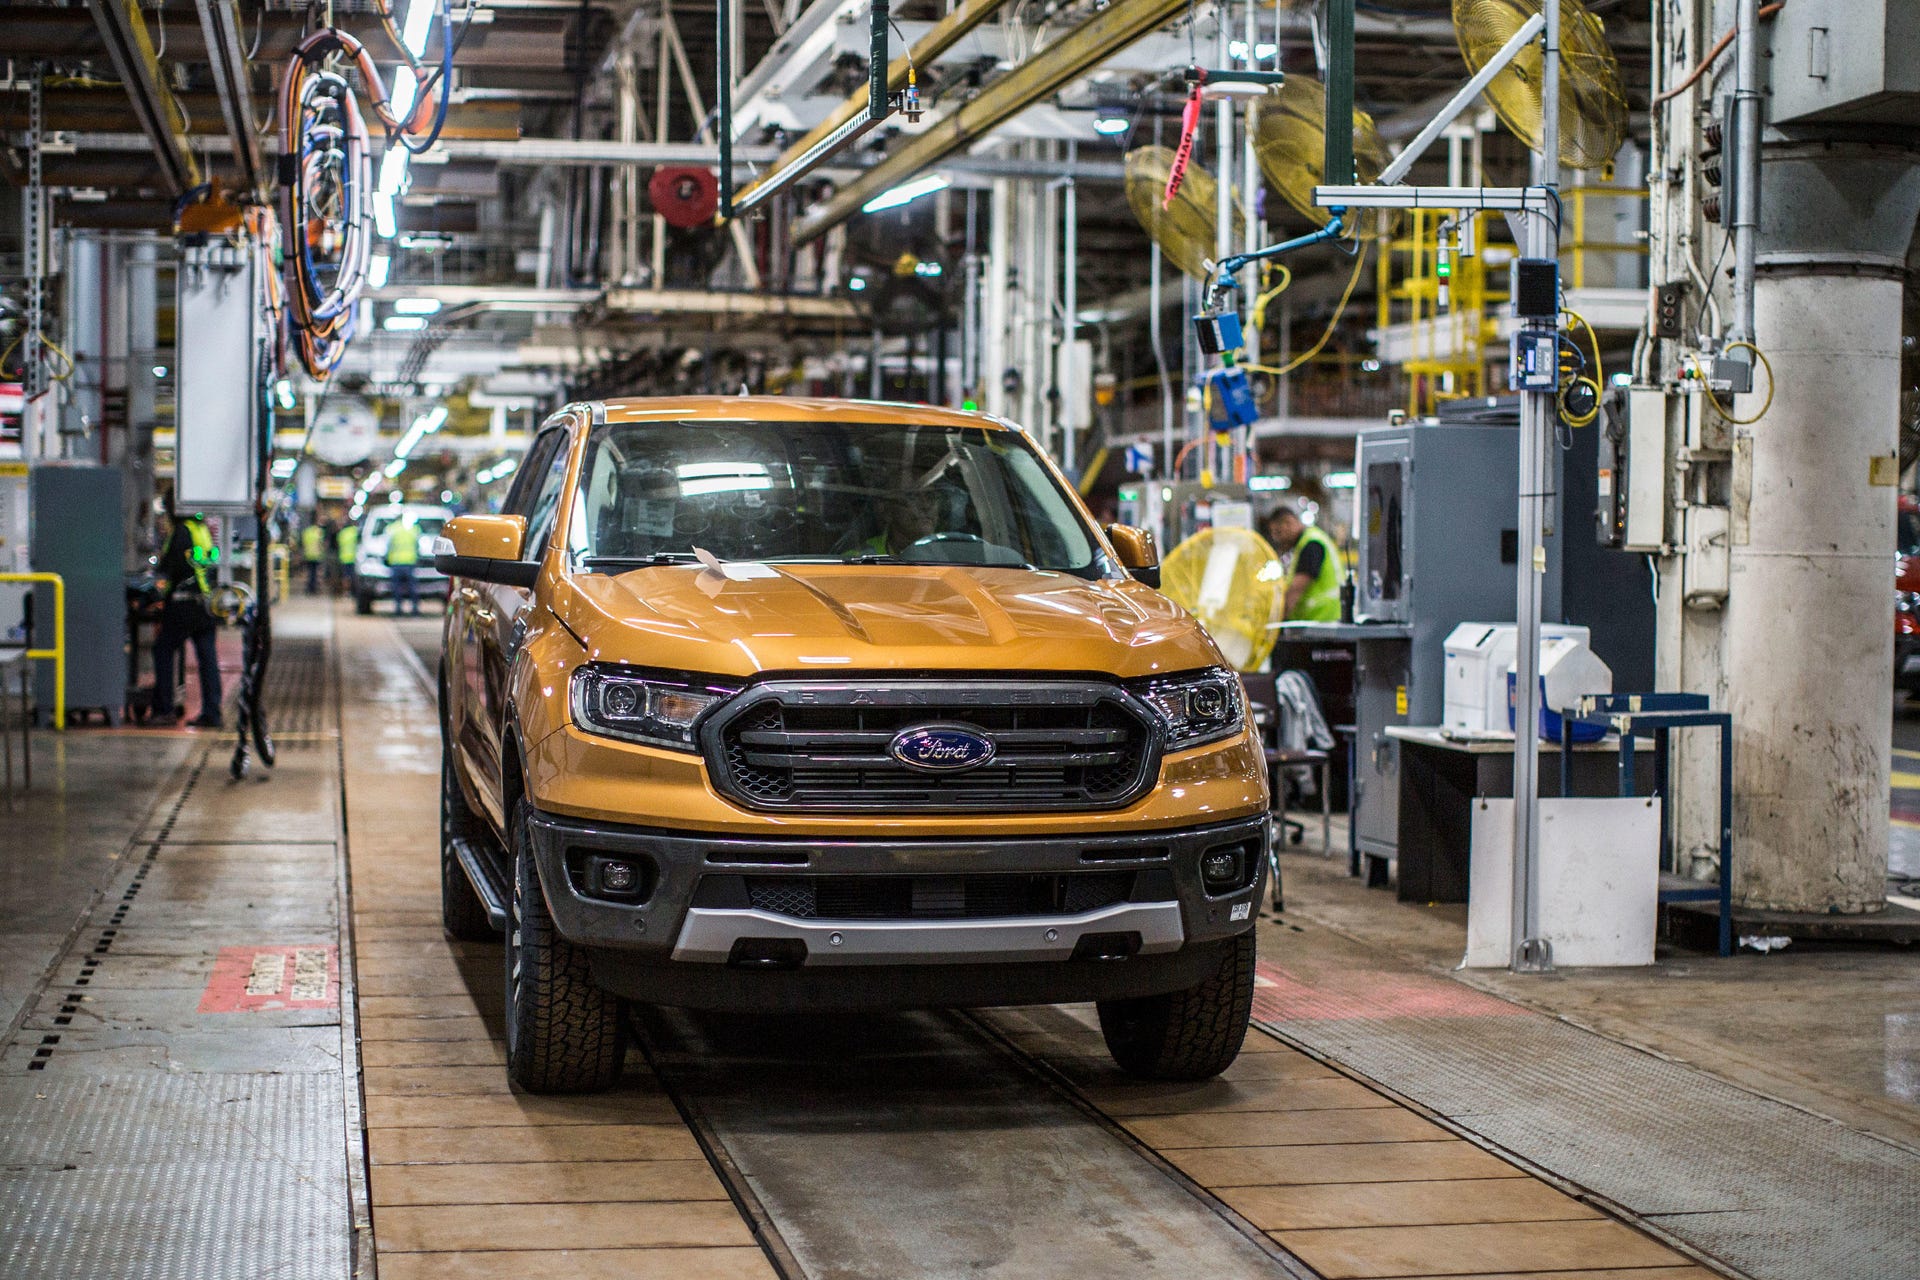 2019 Ford Ranger production